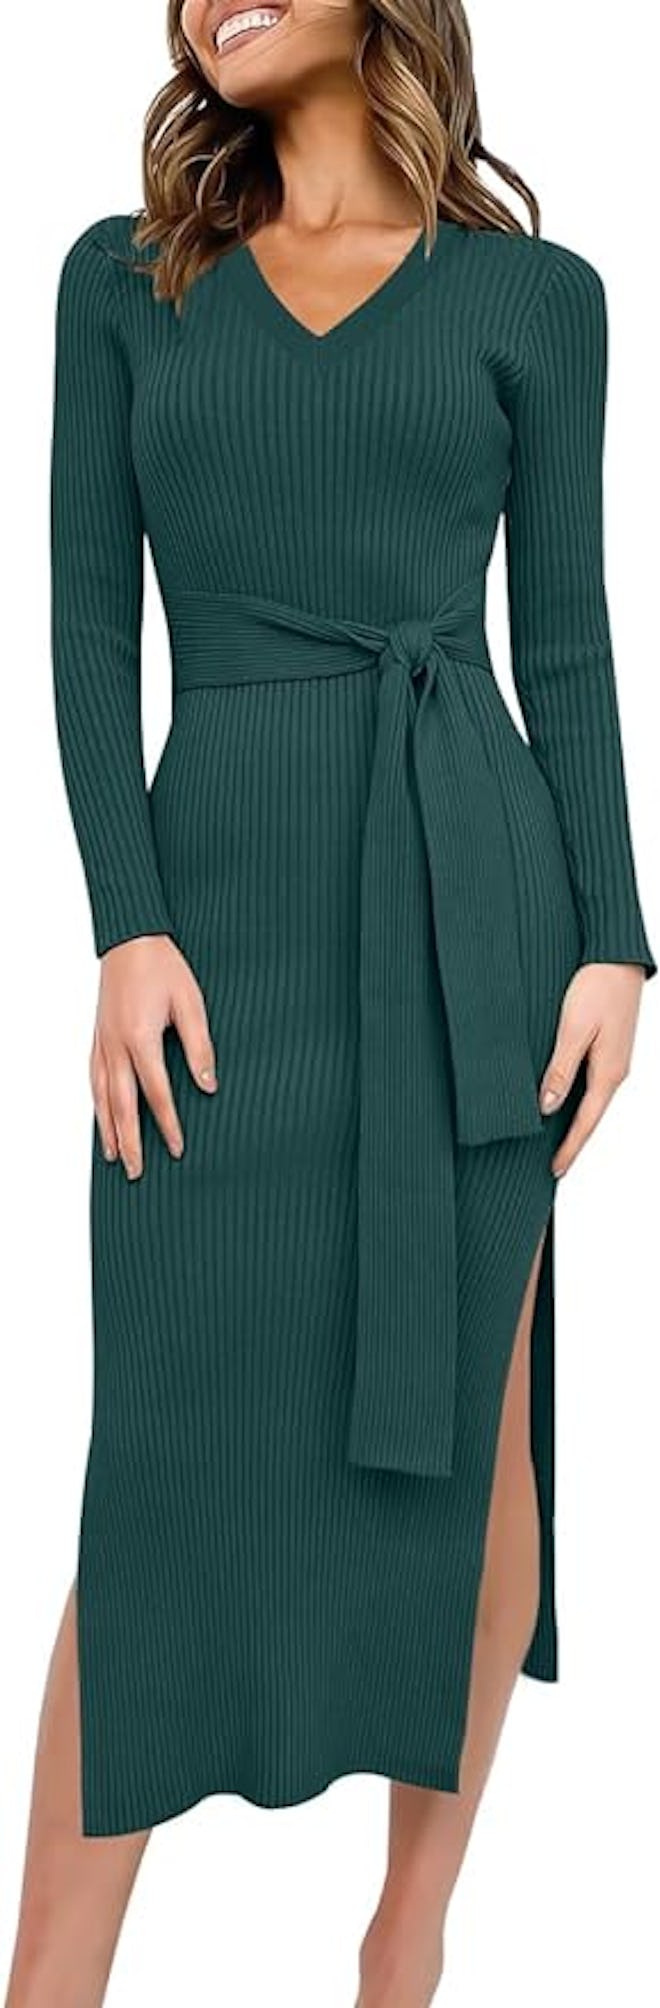 Caracilia Long Sleeve Sweater Dress